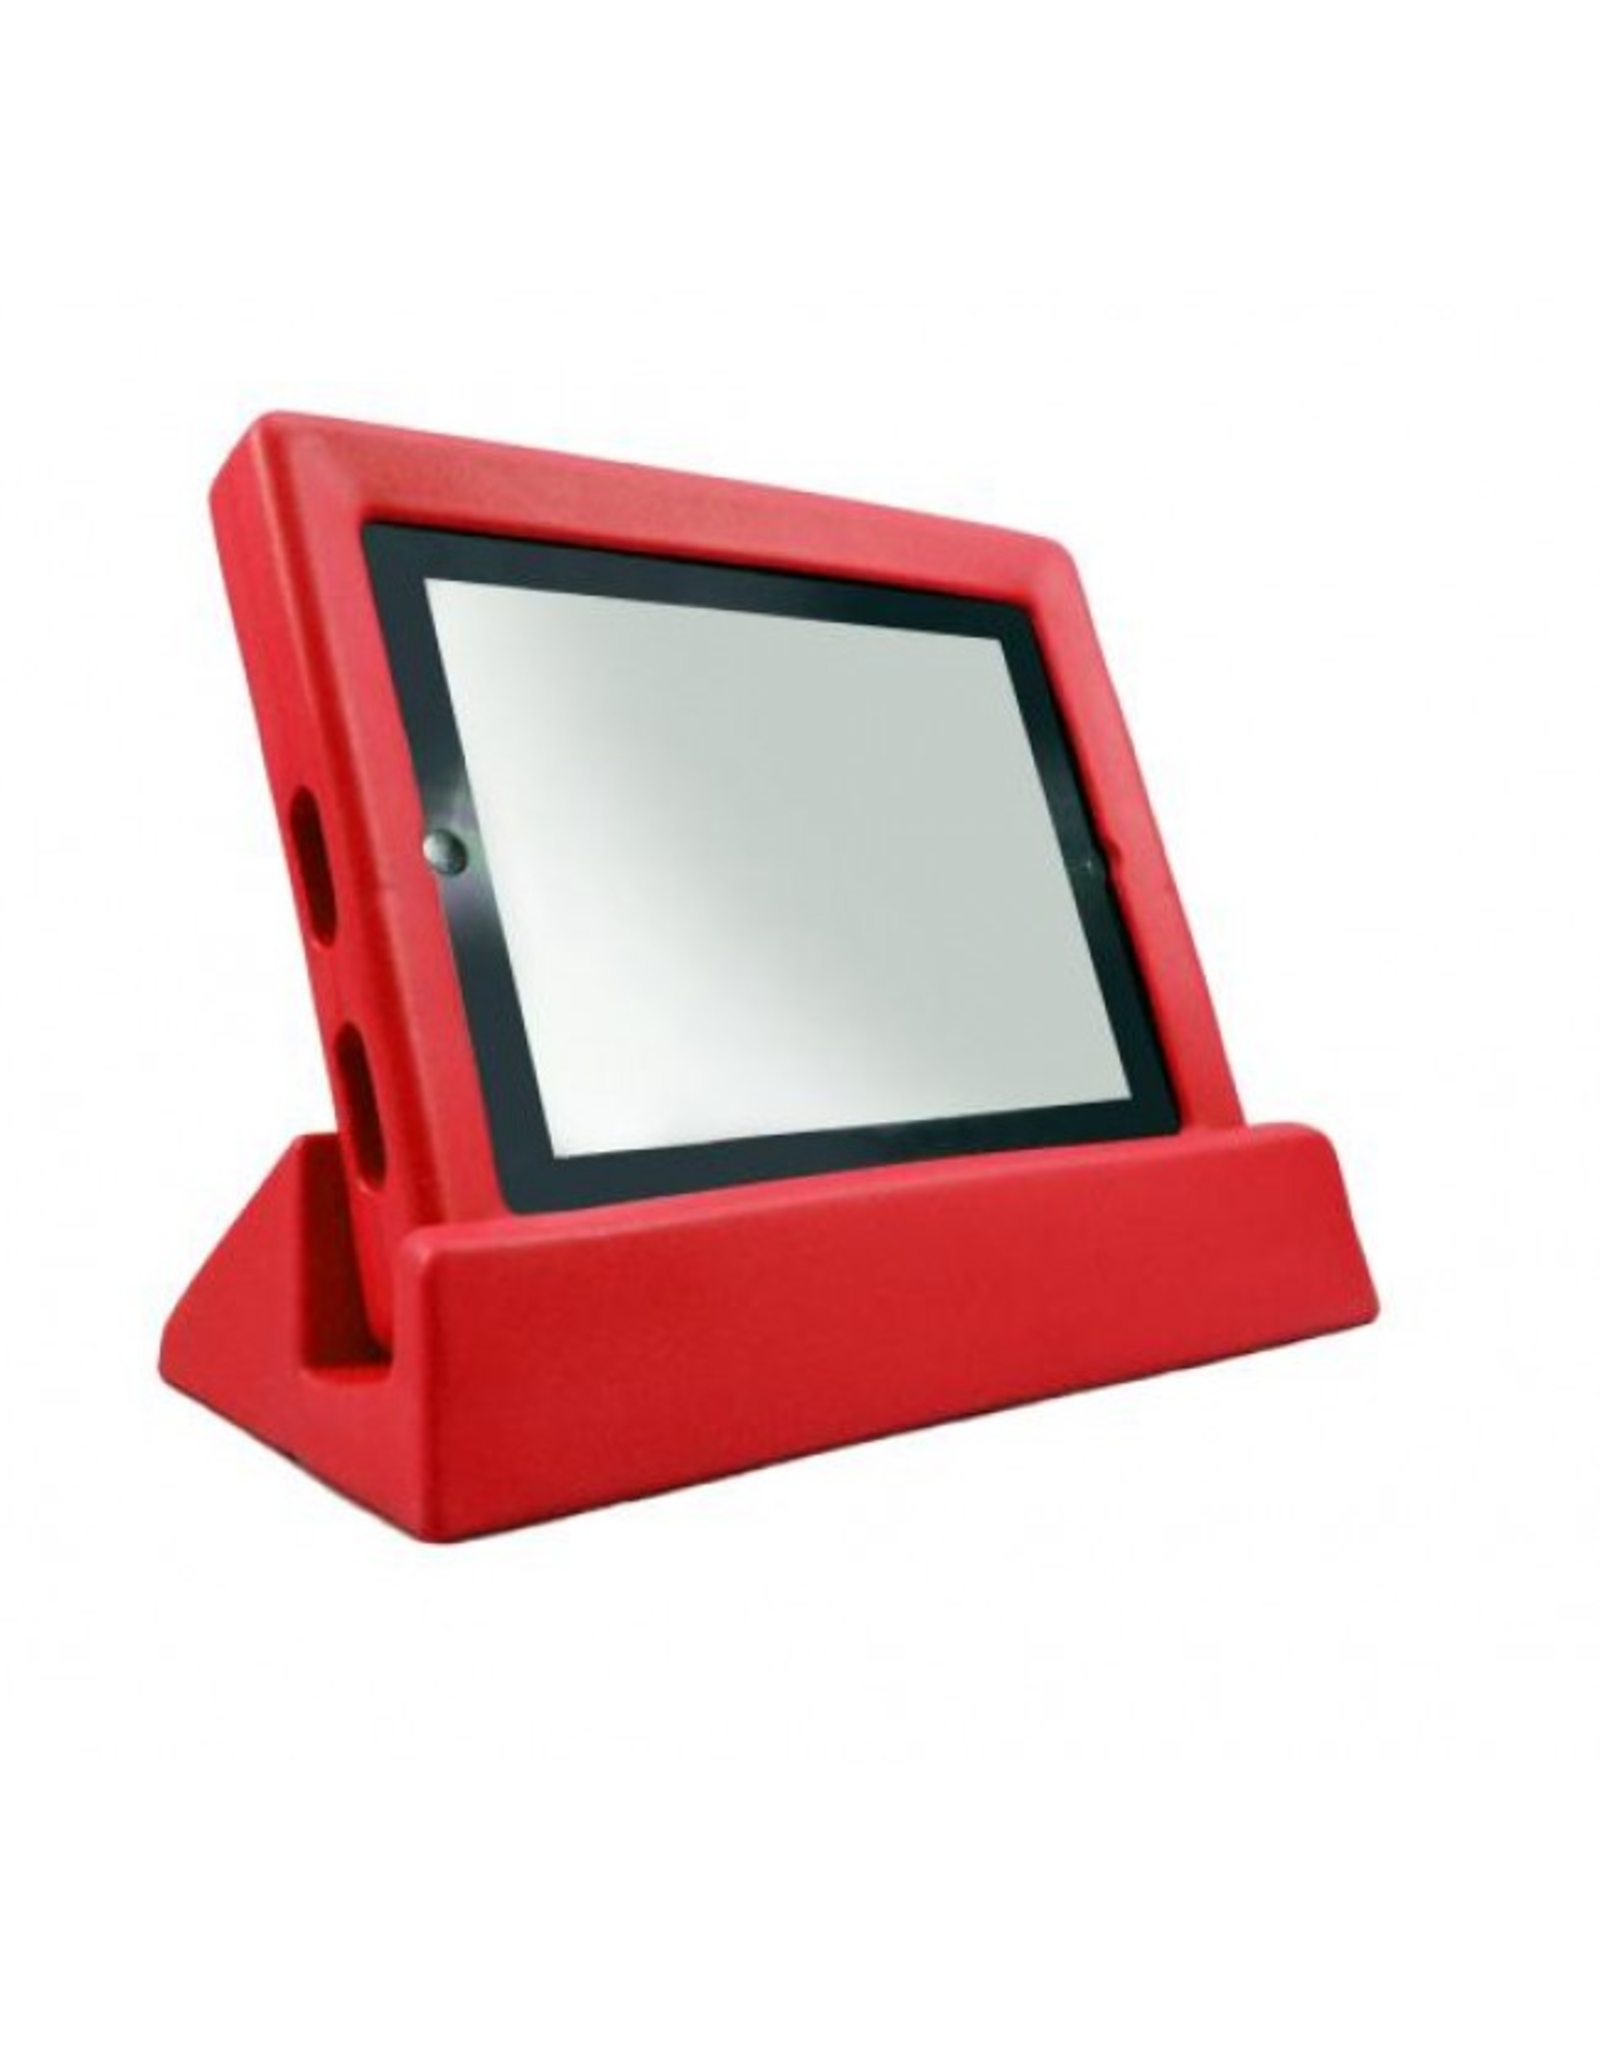 Koosh Koosh Frame and Stand for iPad2/3/4 - Red